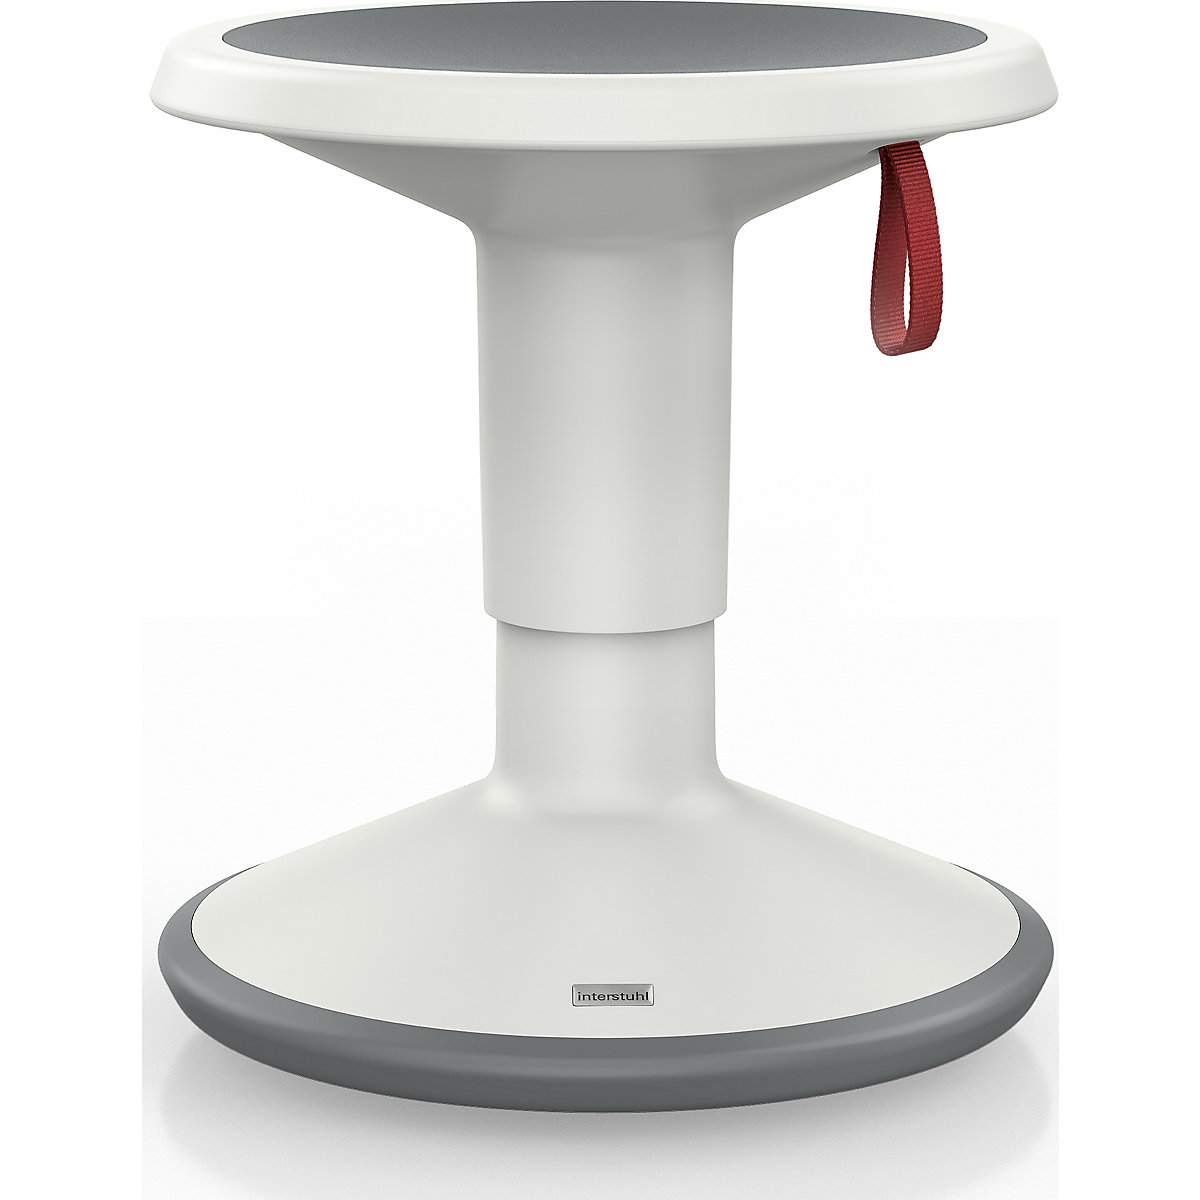 interstuhl – UP multifunctional stool, height adjustable 375 – 490 mm, grey white